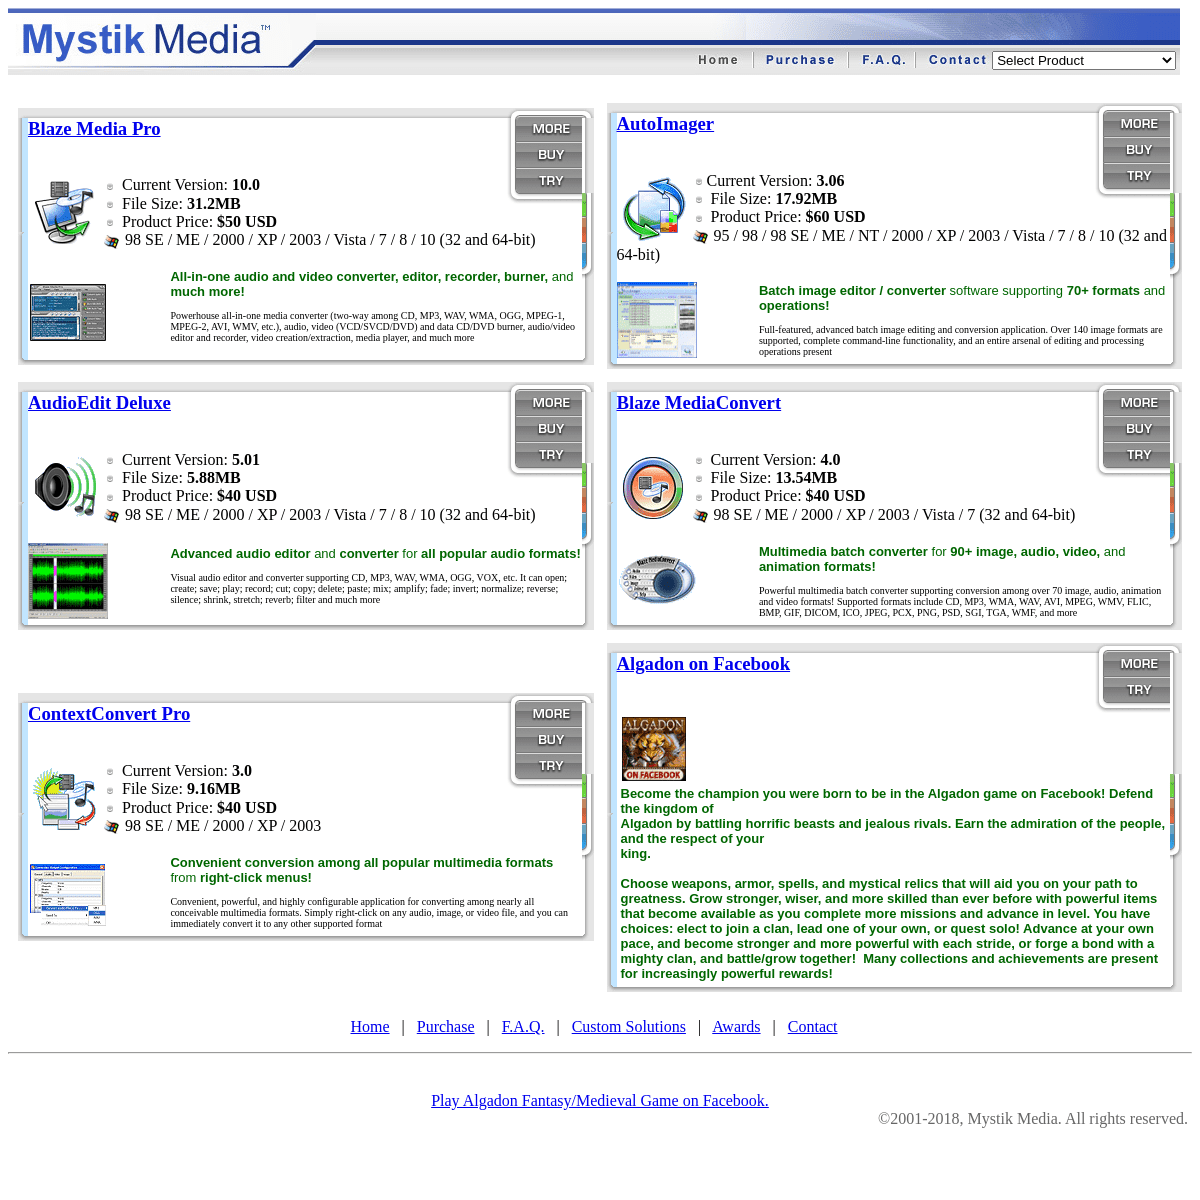 A complete backup of https://mystikmedia.com